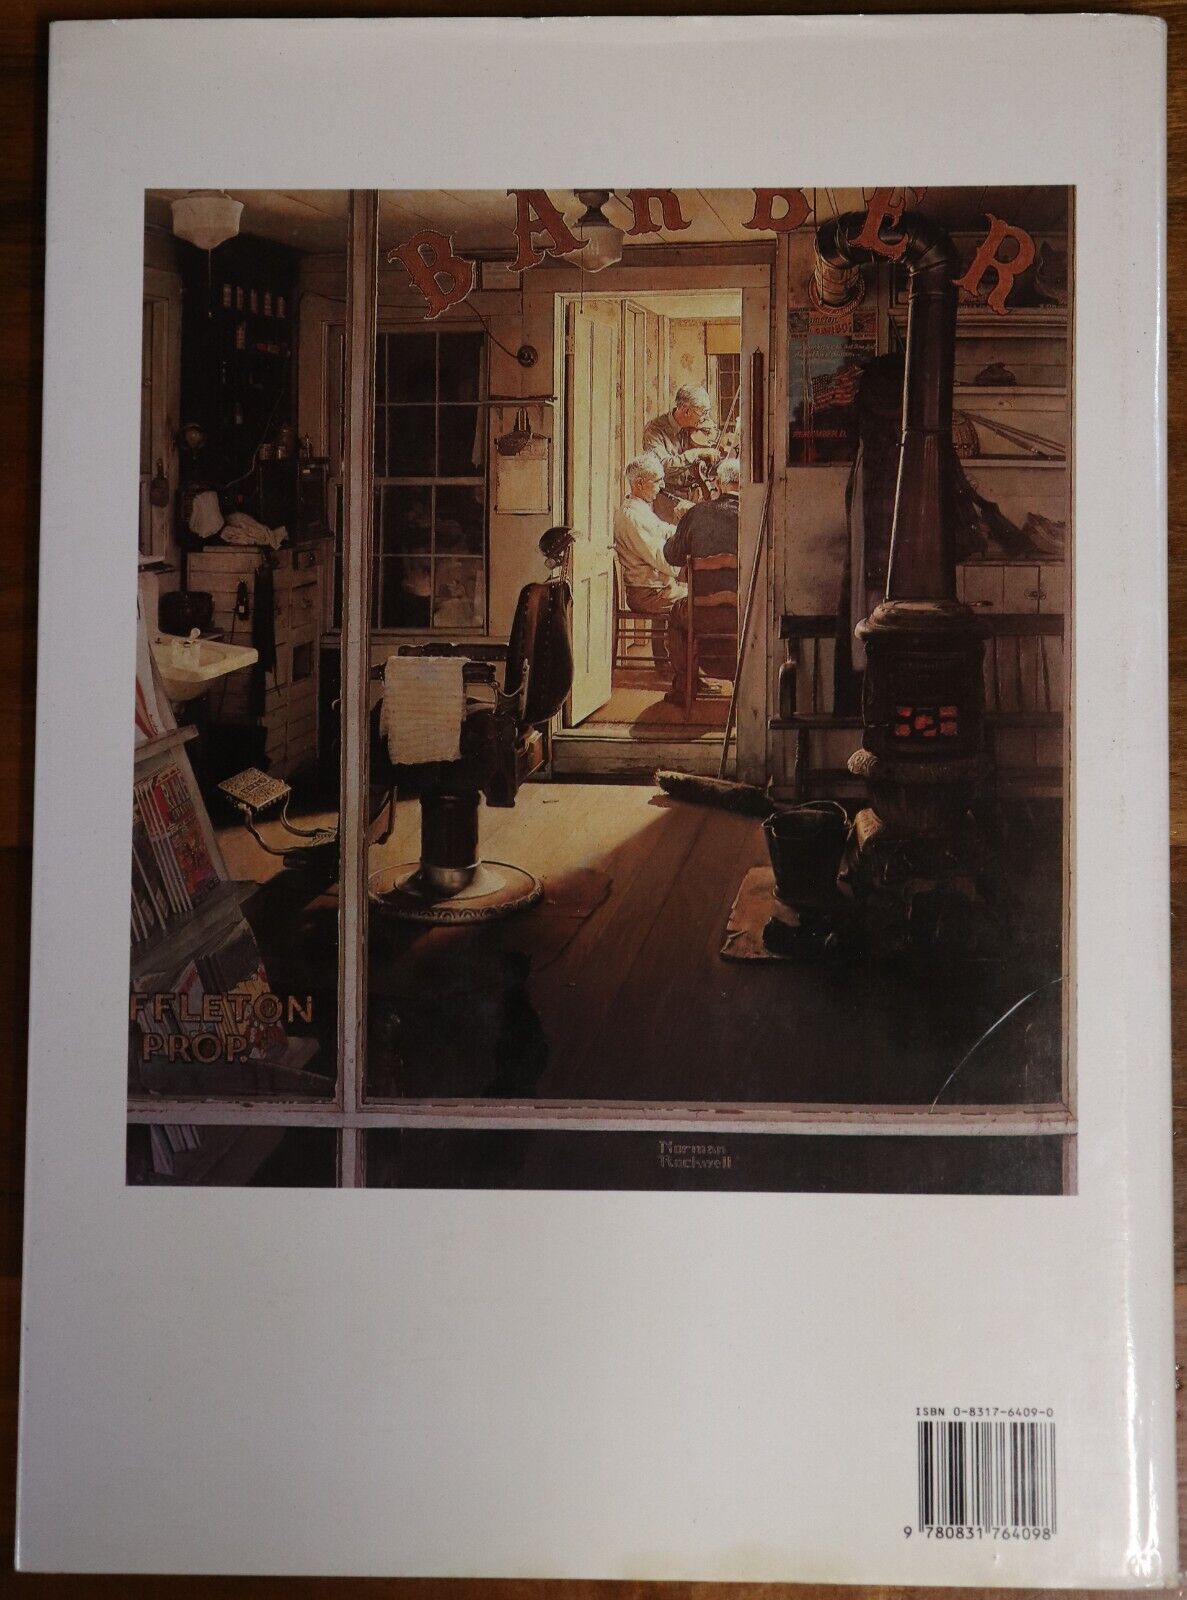 Norman Rockwell by Elizabeth Montgomery - 1989 - American Art Book